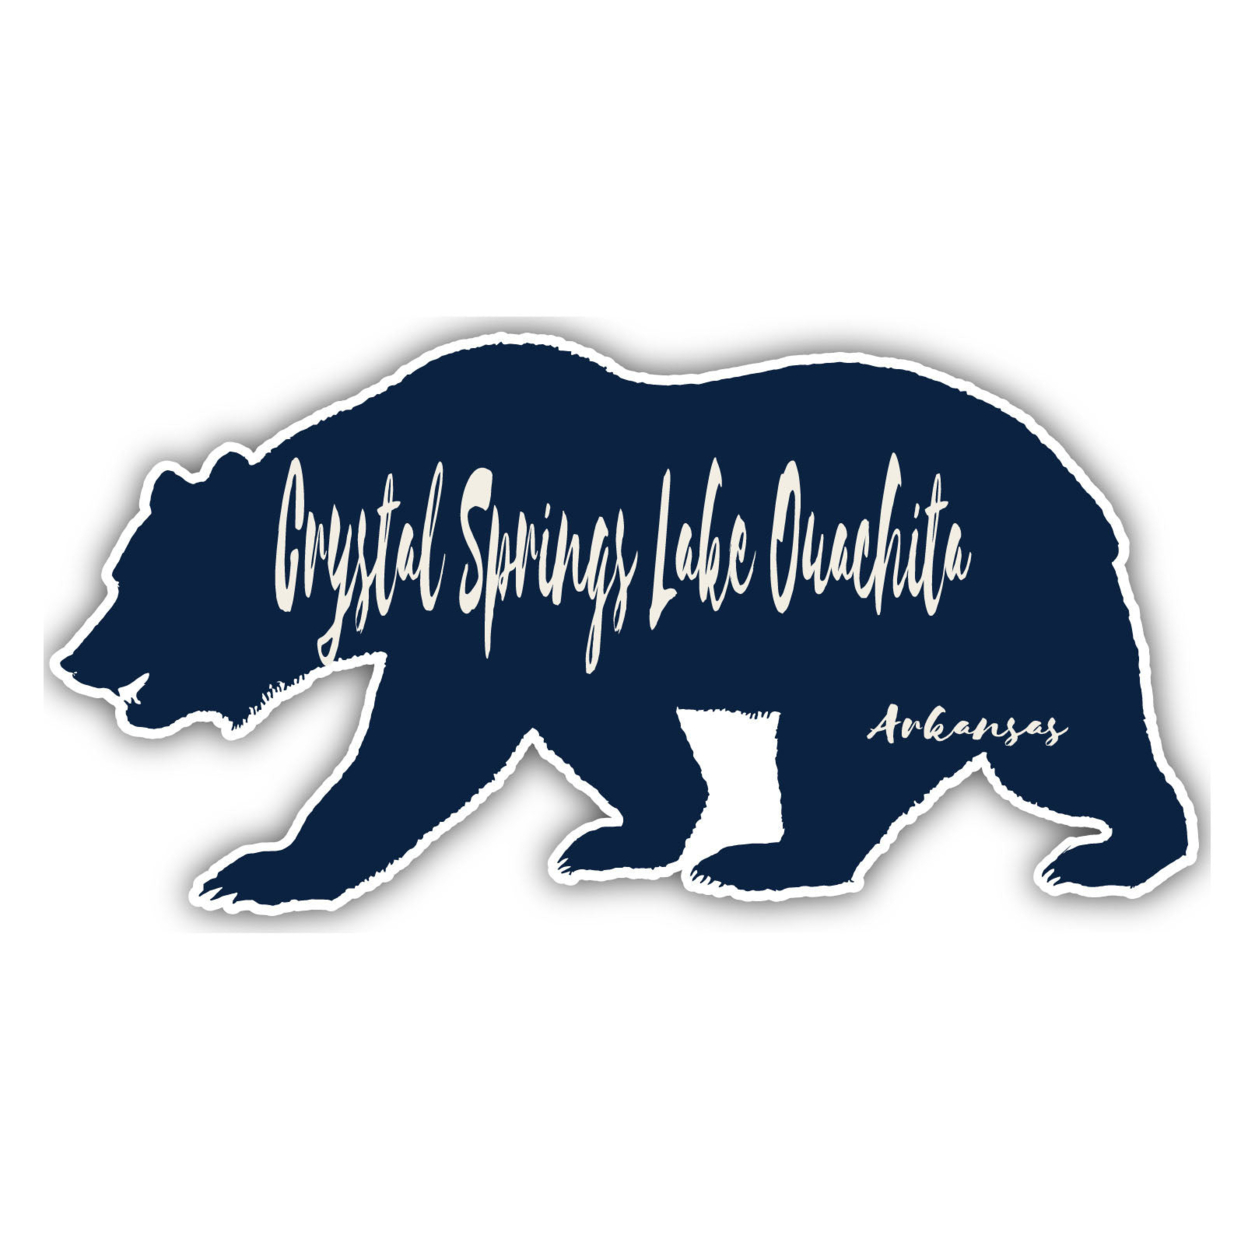 Crystal Springs Lake Ouachita Arkansas Souvenir Decorative Stickers (Choose Theme And Size) - 4-Pack, 4-Inch, Bear